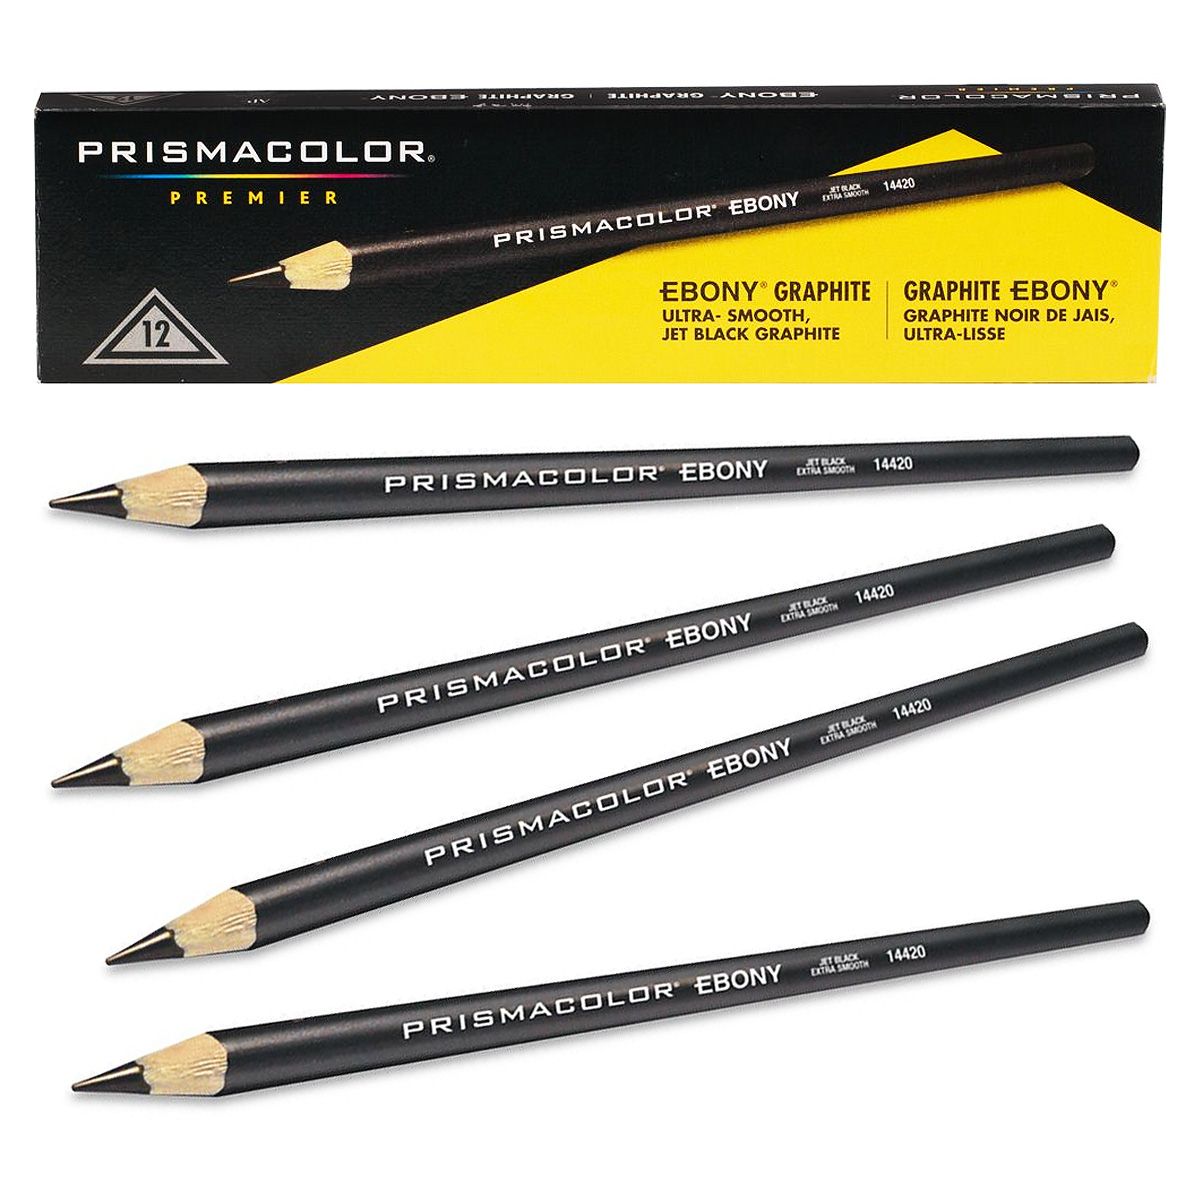 https://www.jerrysartarama.com/media/catalog/product/cache/ecb49a32eeb5603594b082bd5fe65733/p/r/prismacolor-ebony-graphite-pencils_1.jpg